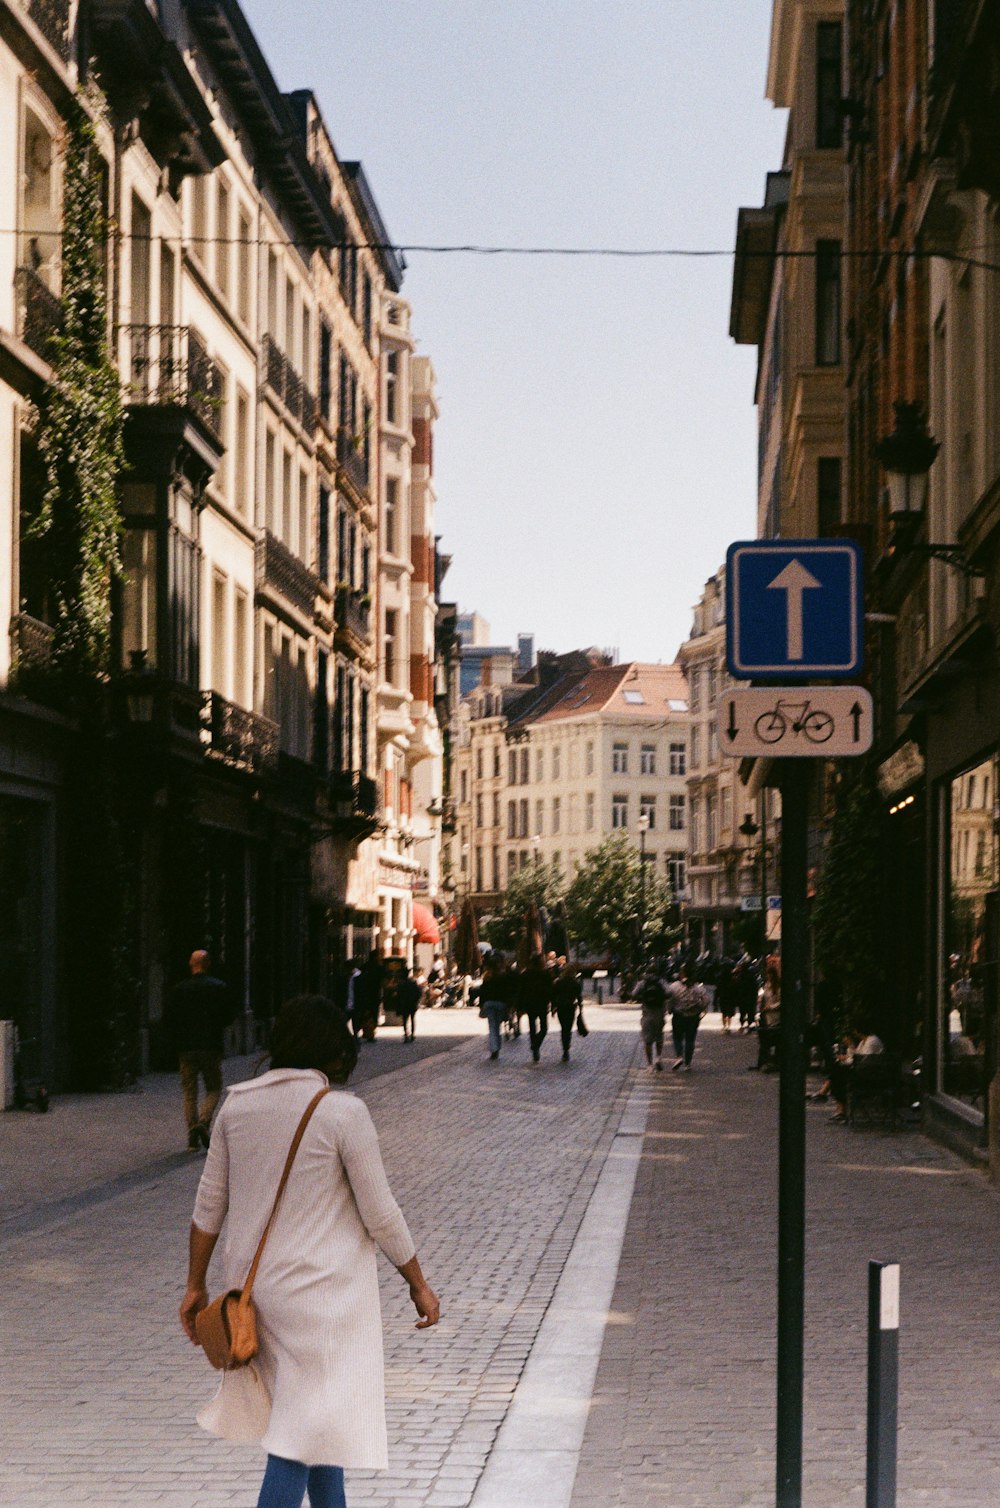 a person walking down a street